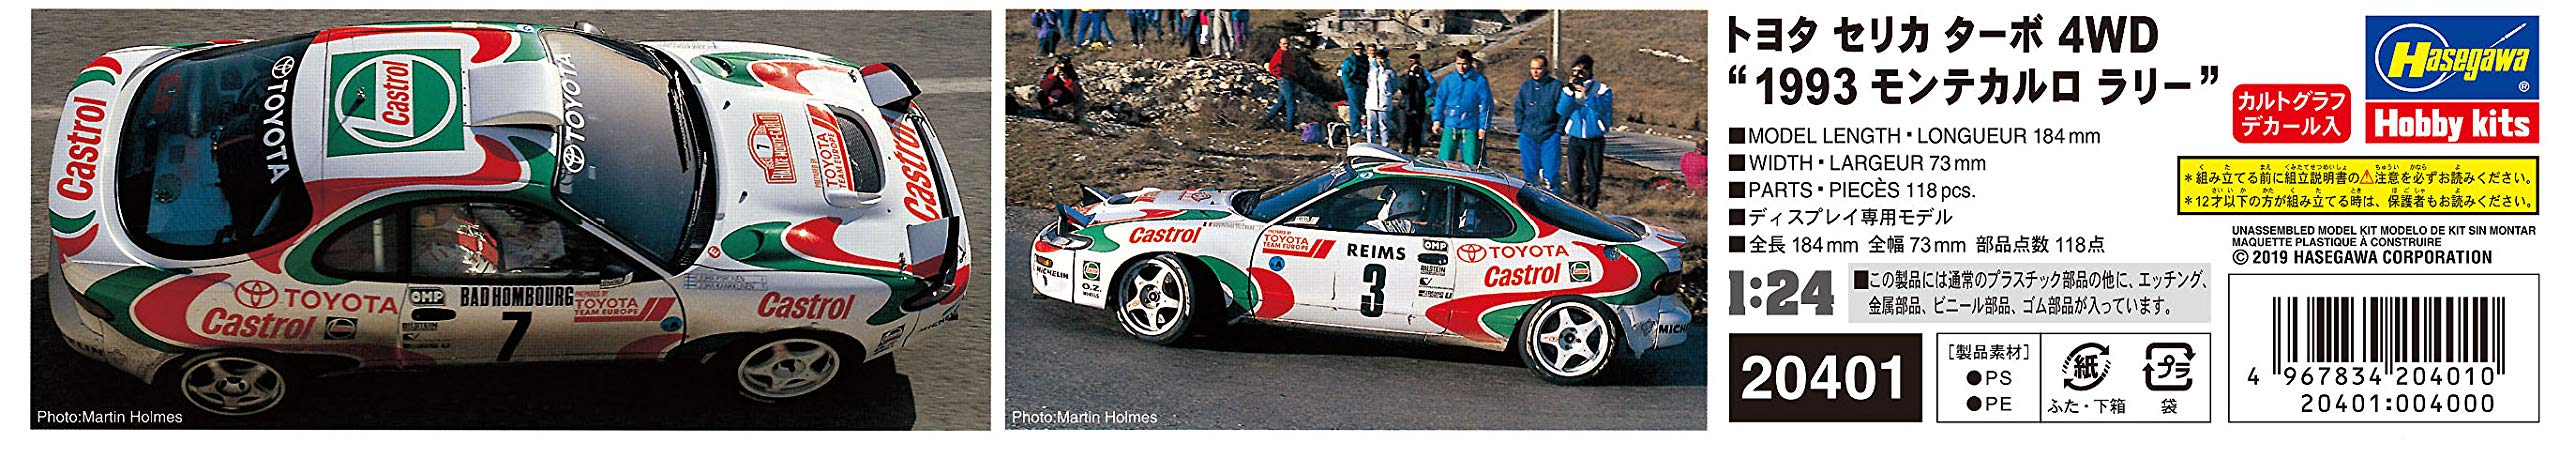 HASEGAWA 20401 Toyota Celica Turbo 4Wd 1993 Monte Carlo Rally 1/24 Scale Kit